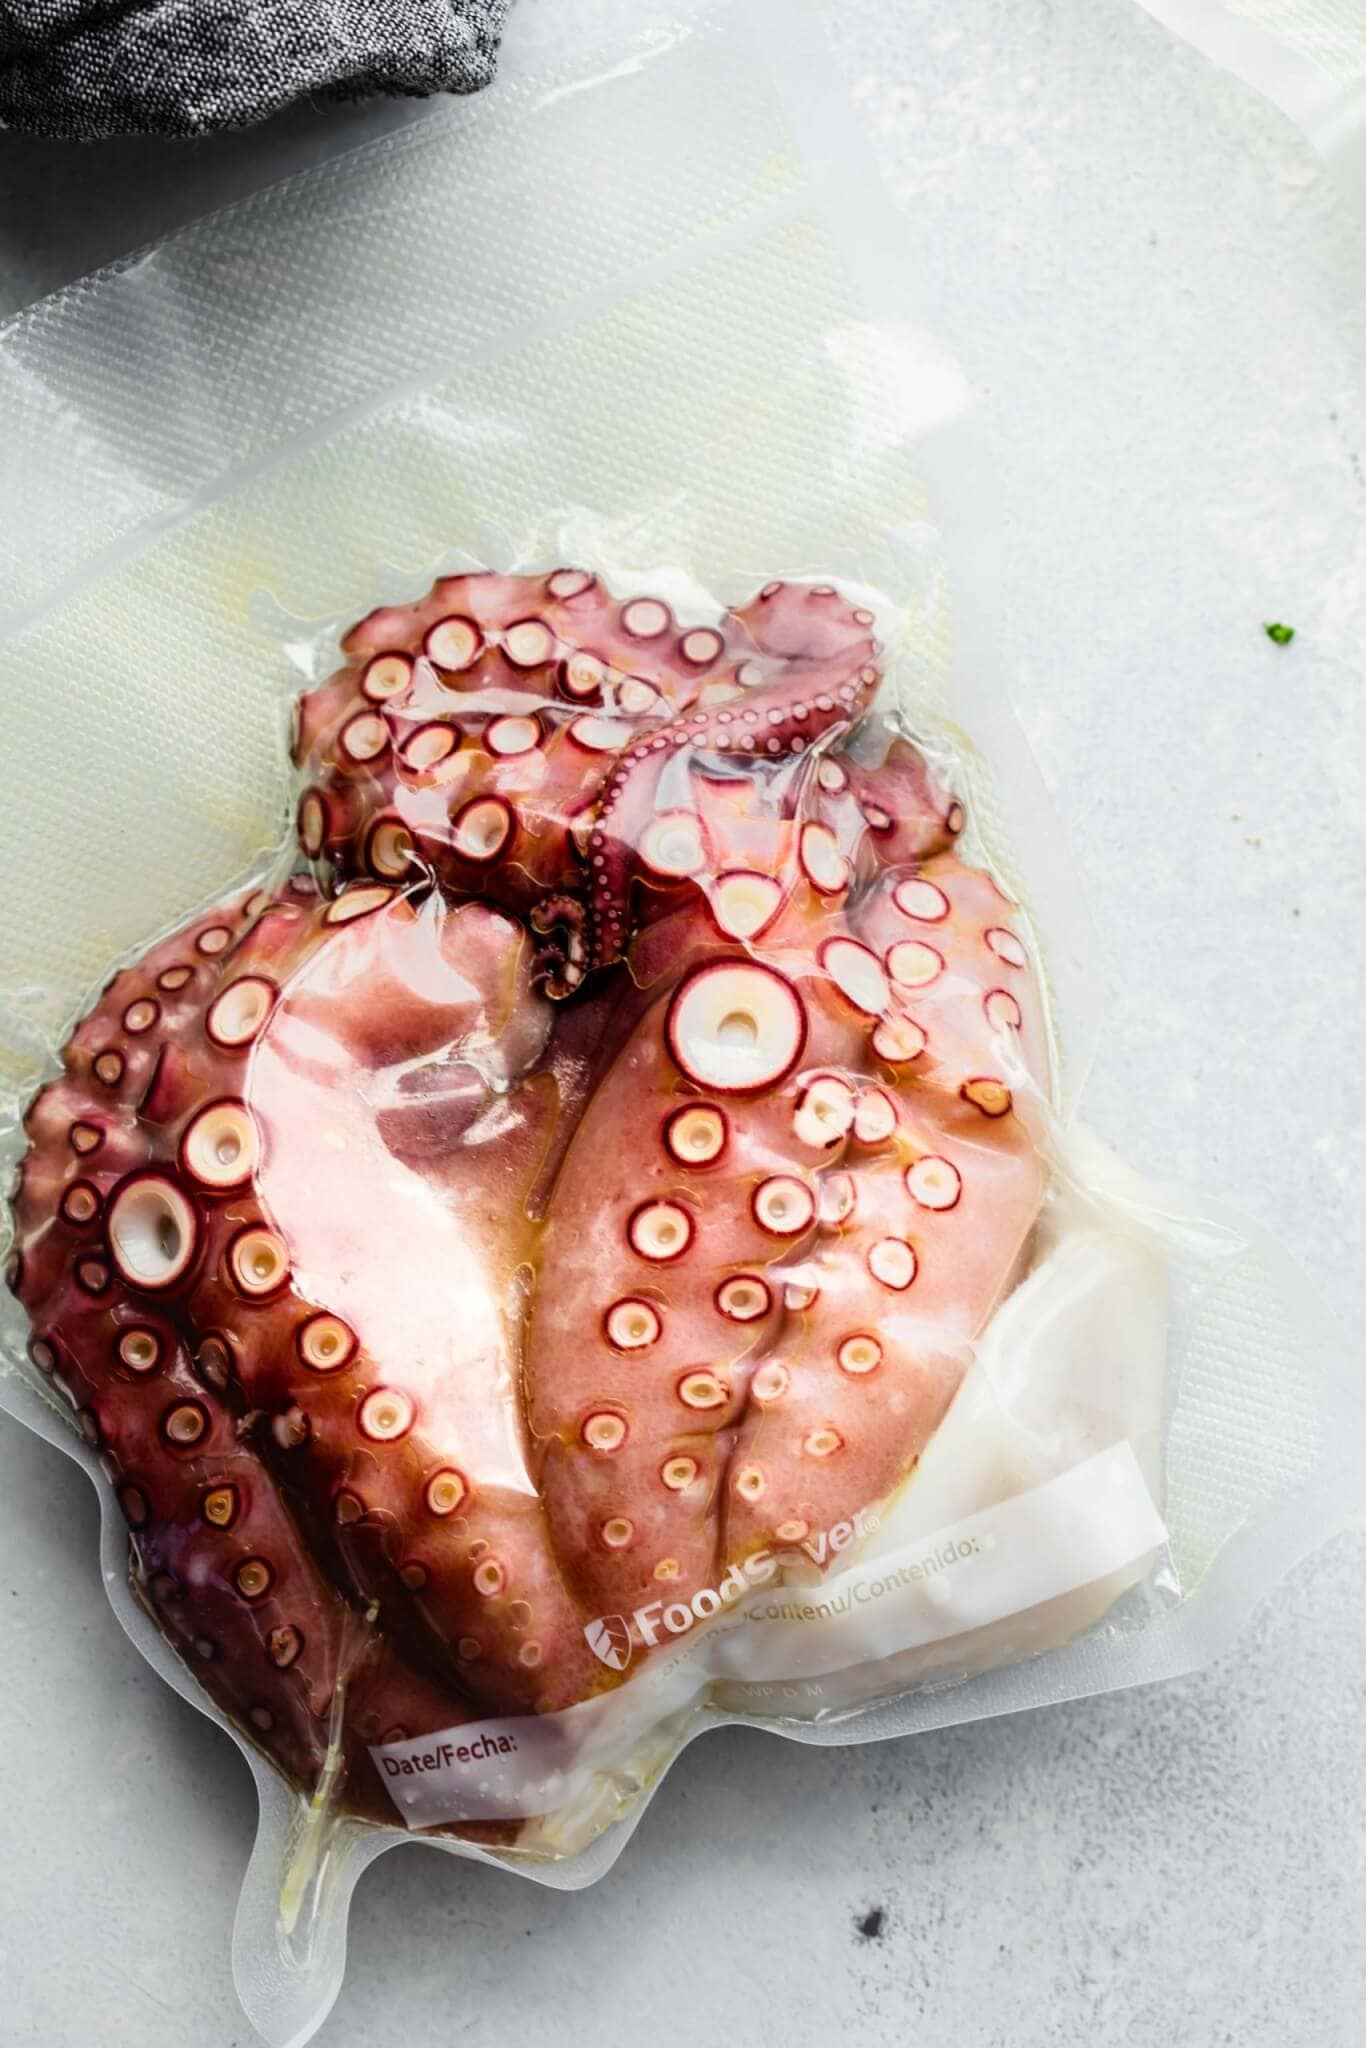 Octopus bagged up in food saver bag.